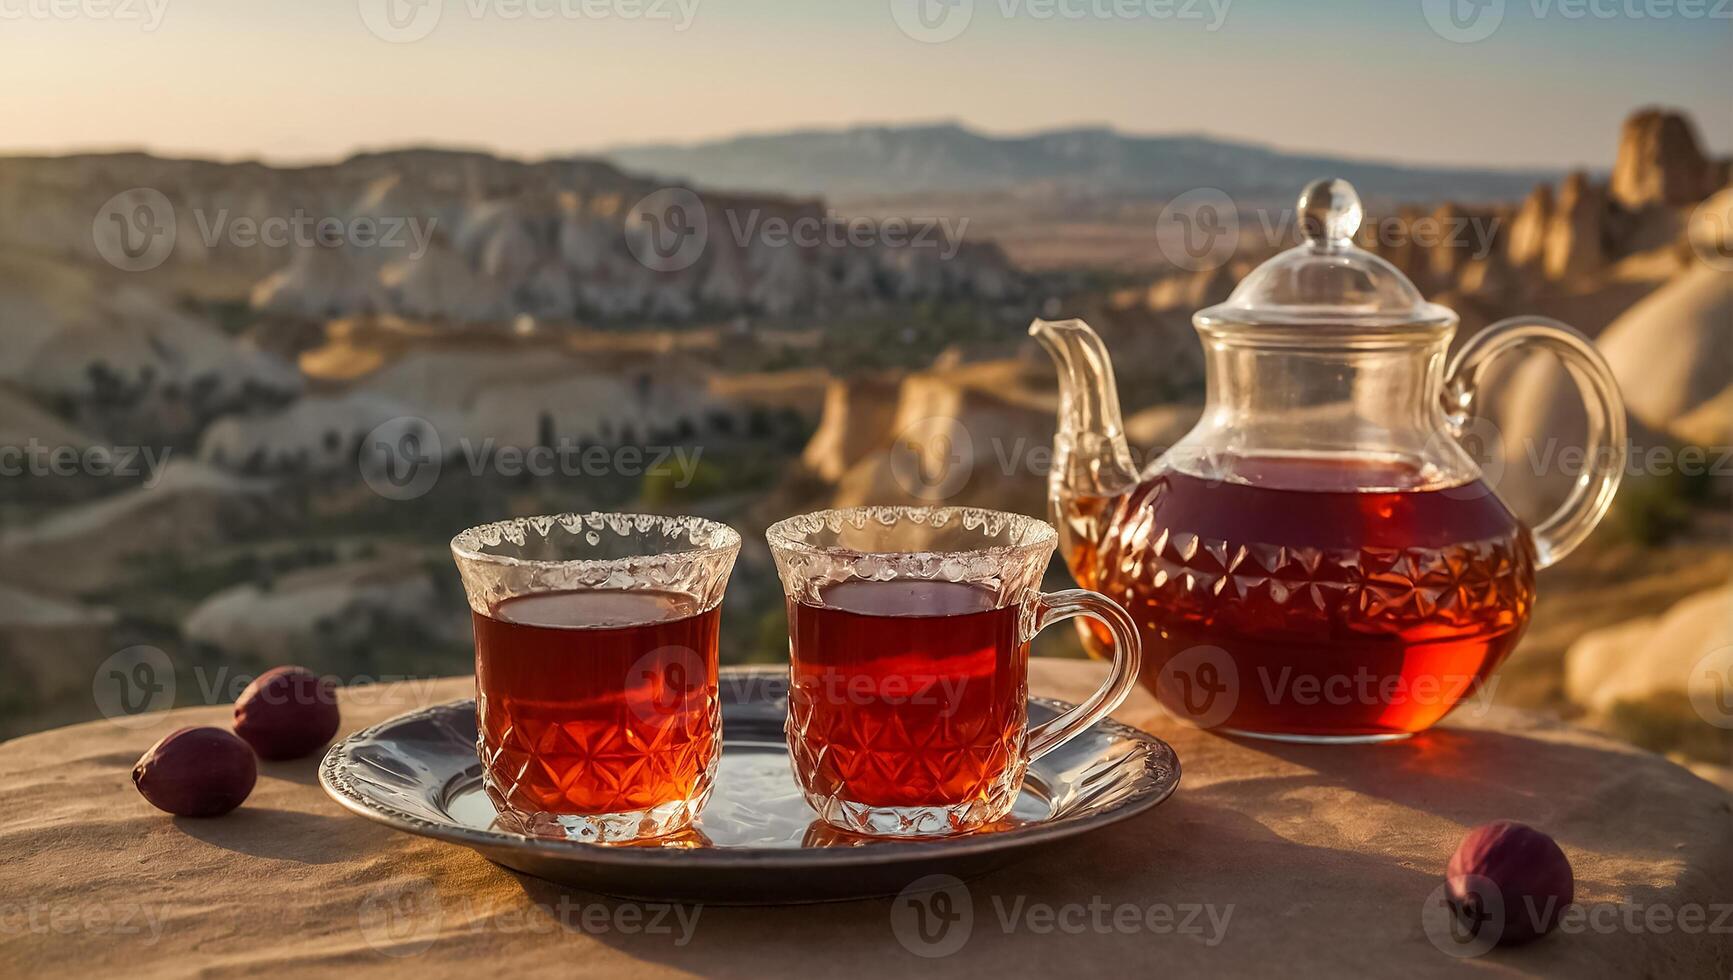 Turkey tea in a glass photo